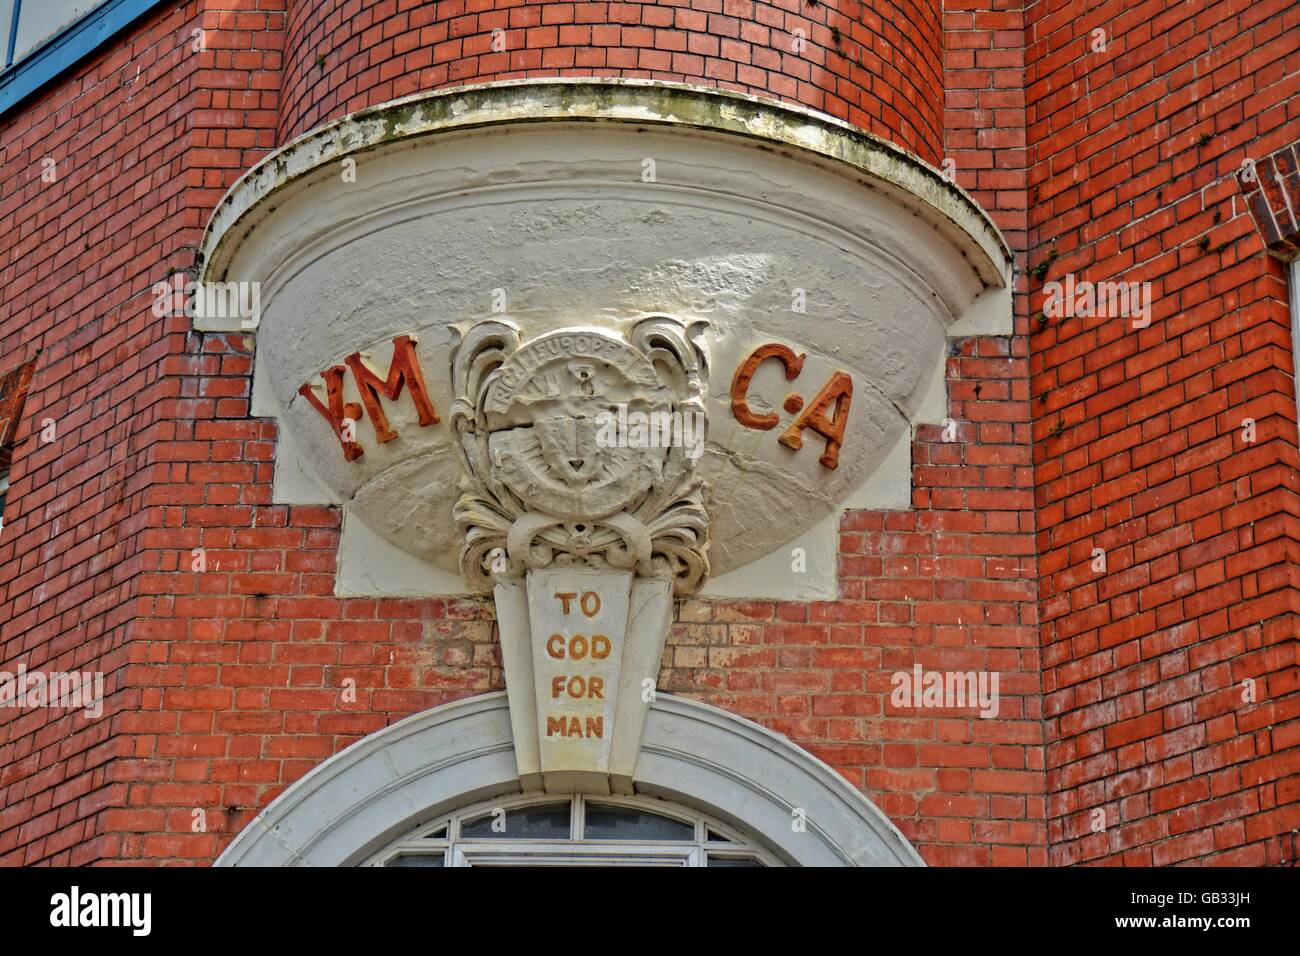 YMCA - alte rote Backsteinhaus mit YMCA Werbung, Wales, UK Stockfoto